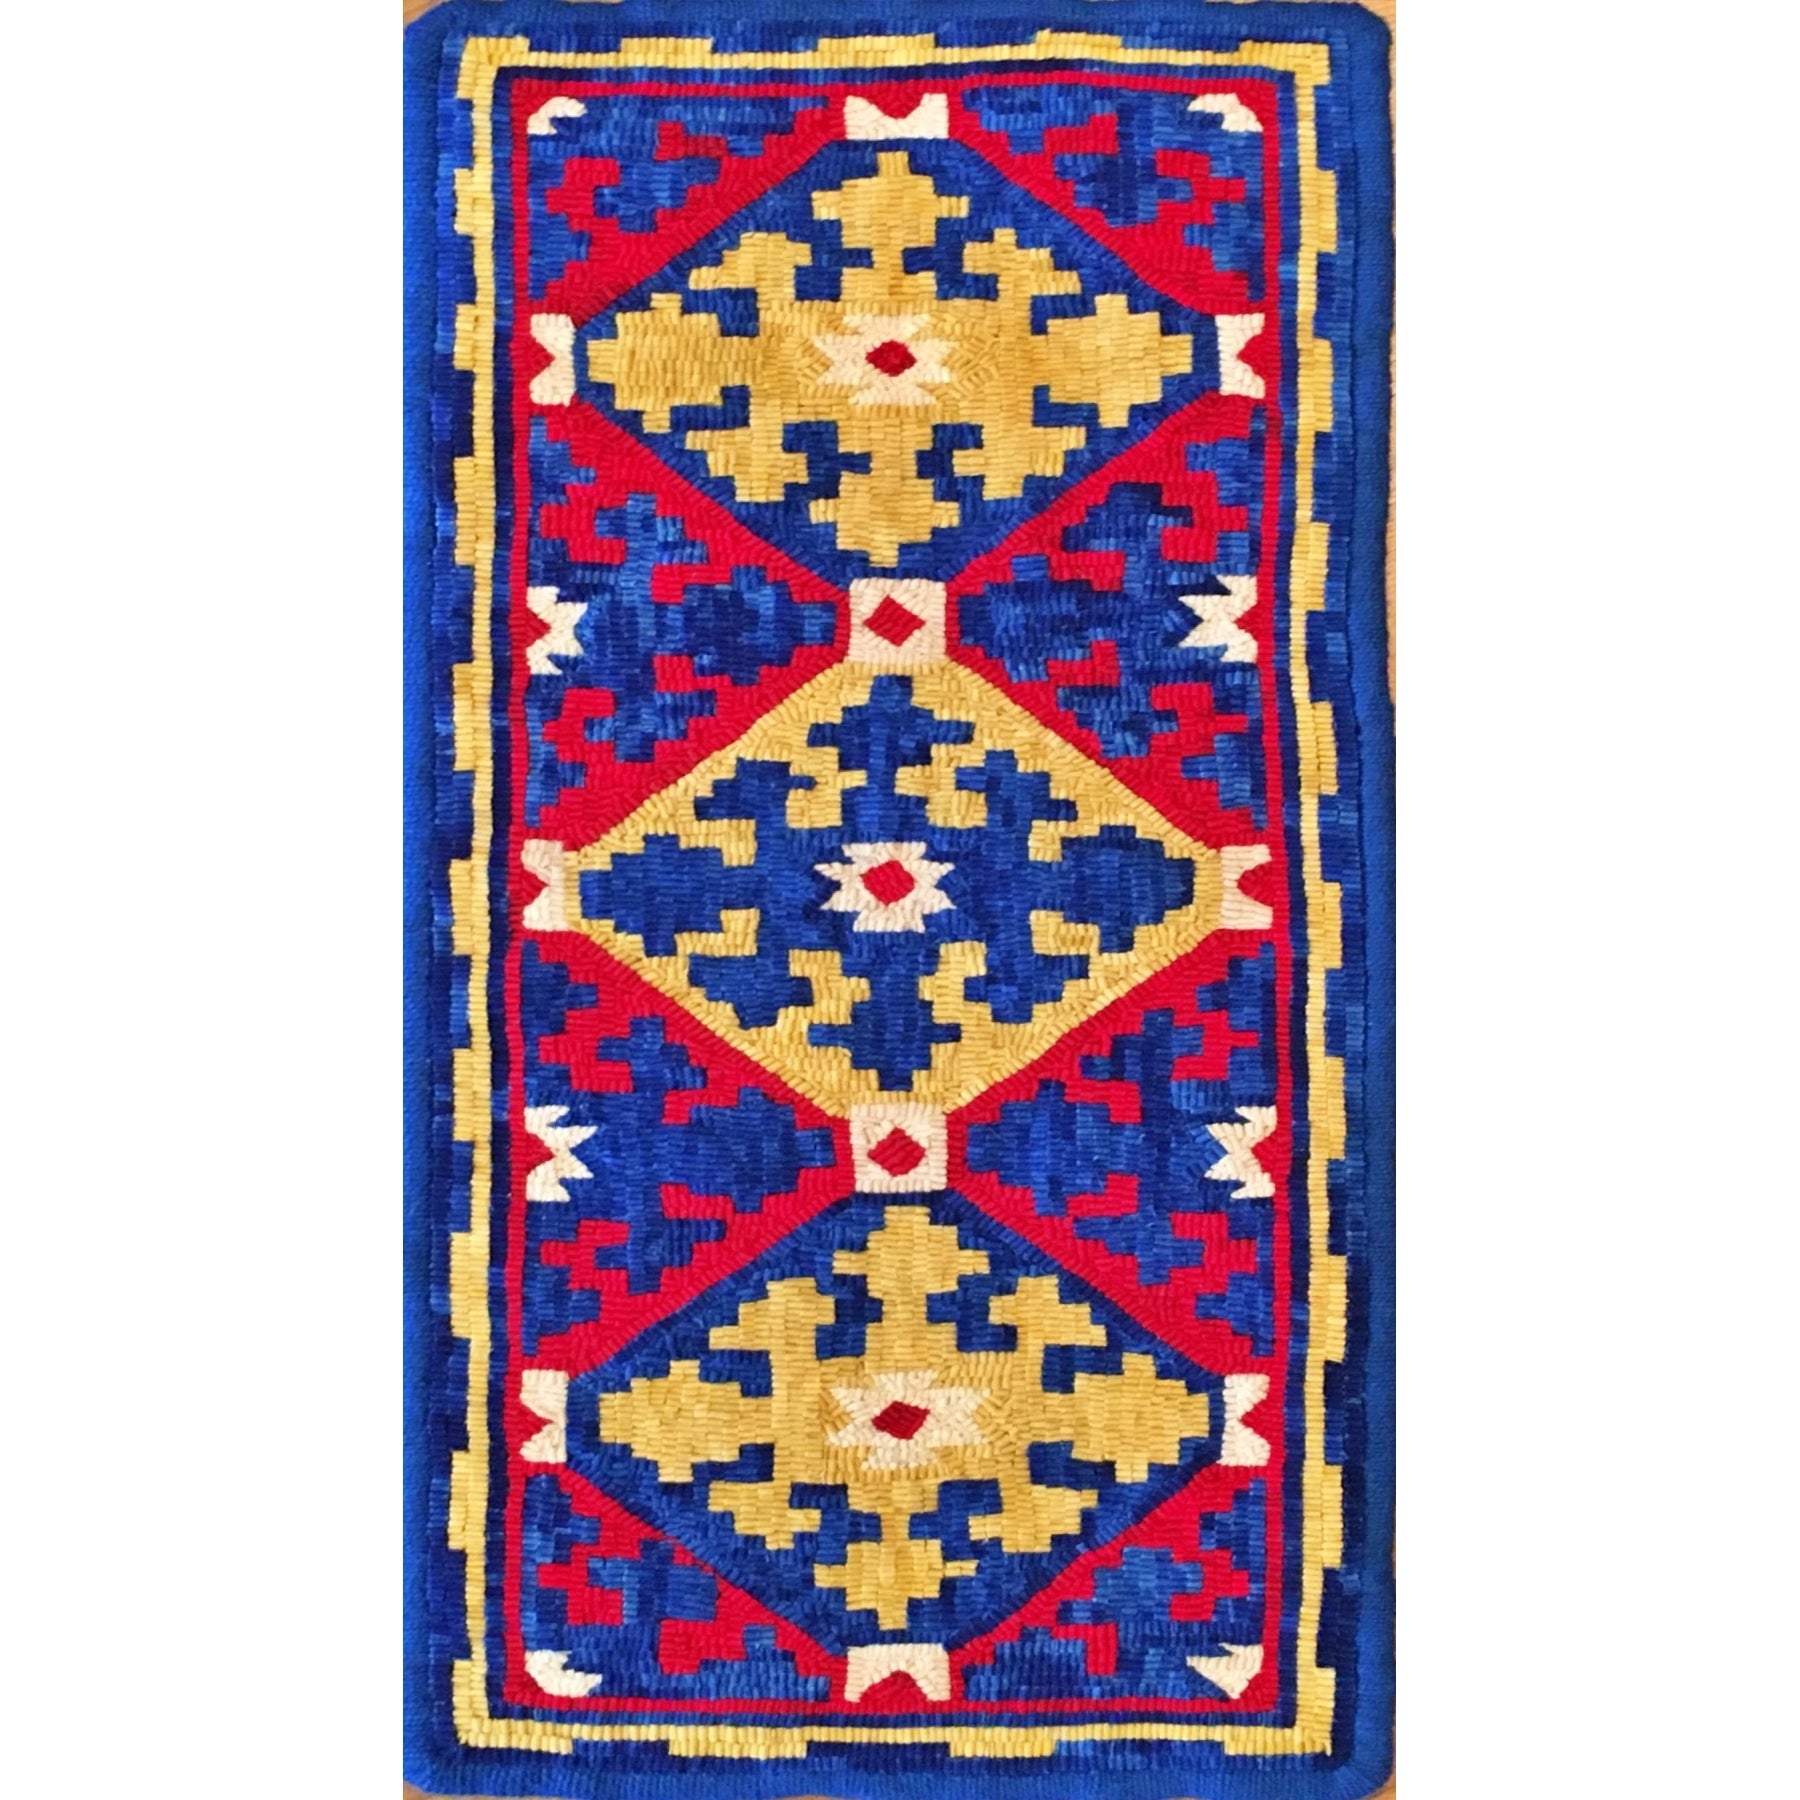 Kurdistan Runner, rug hooked by Alison Knight